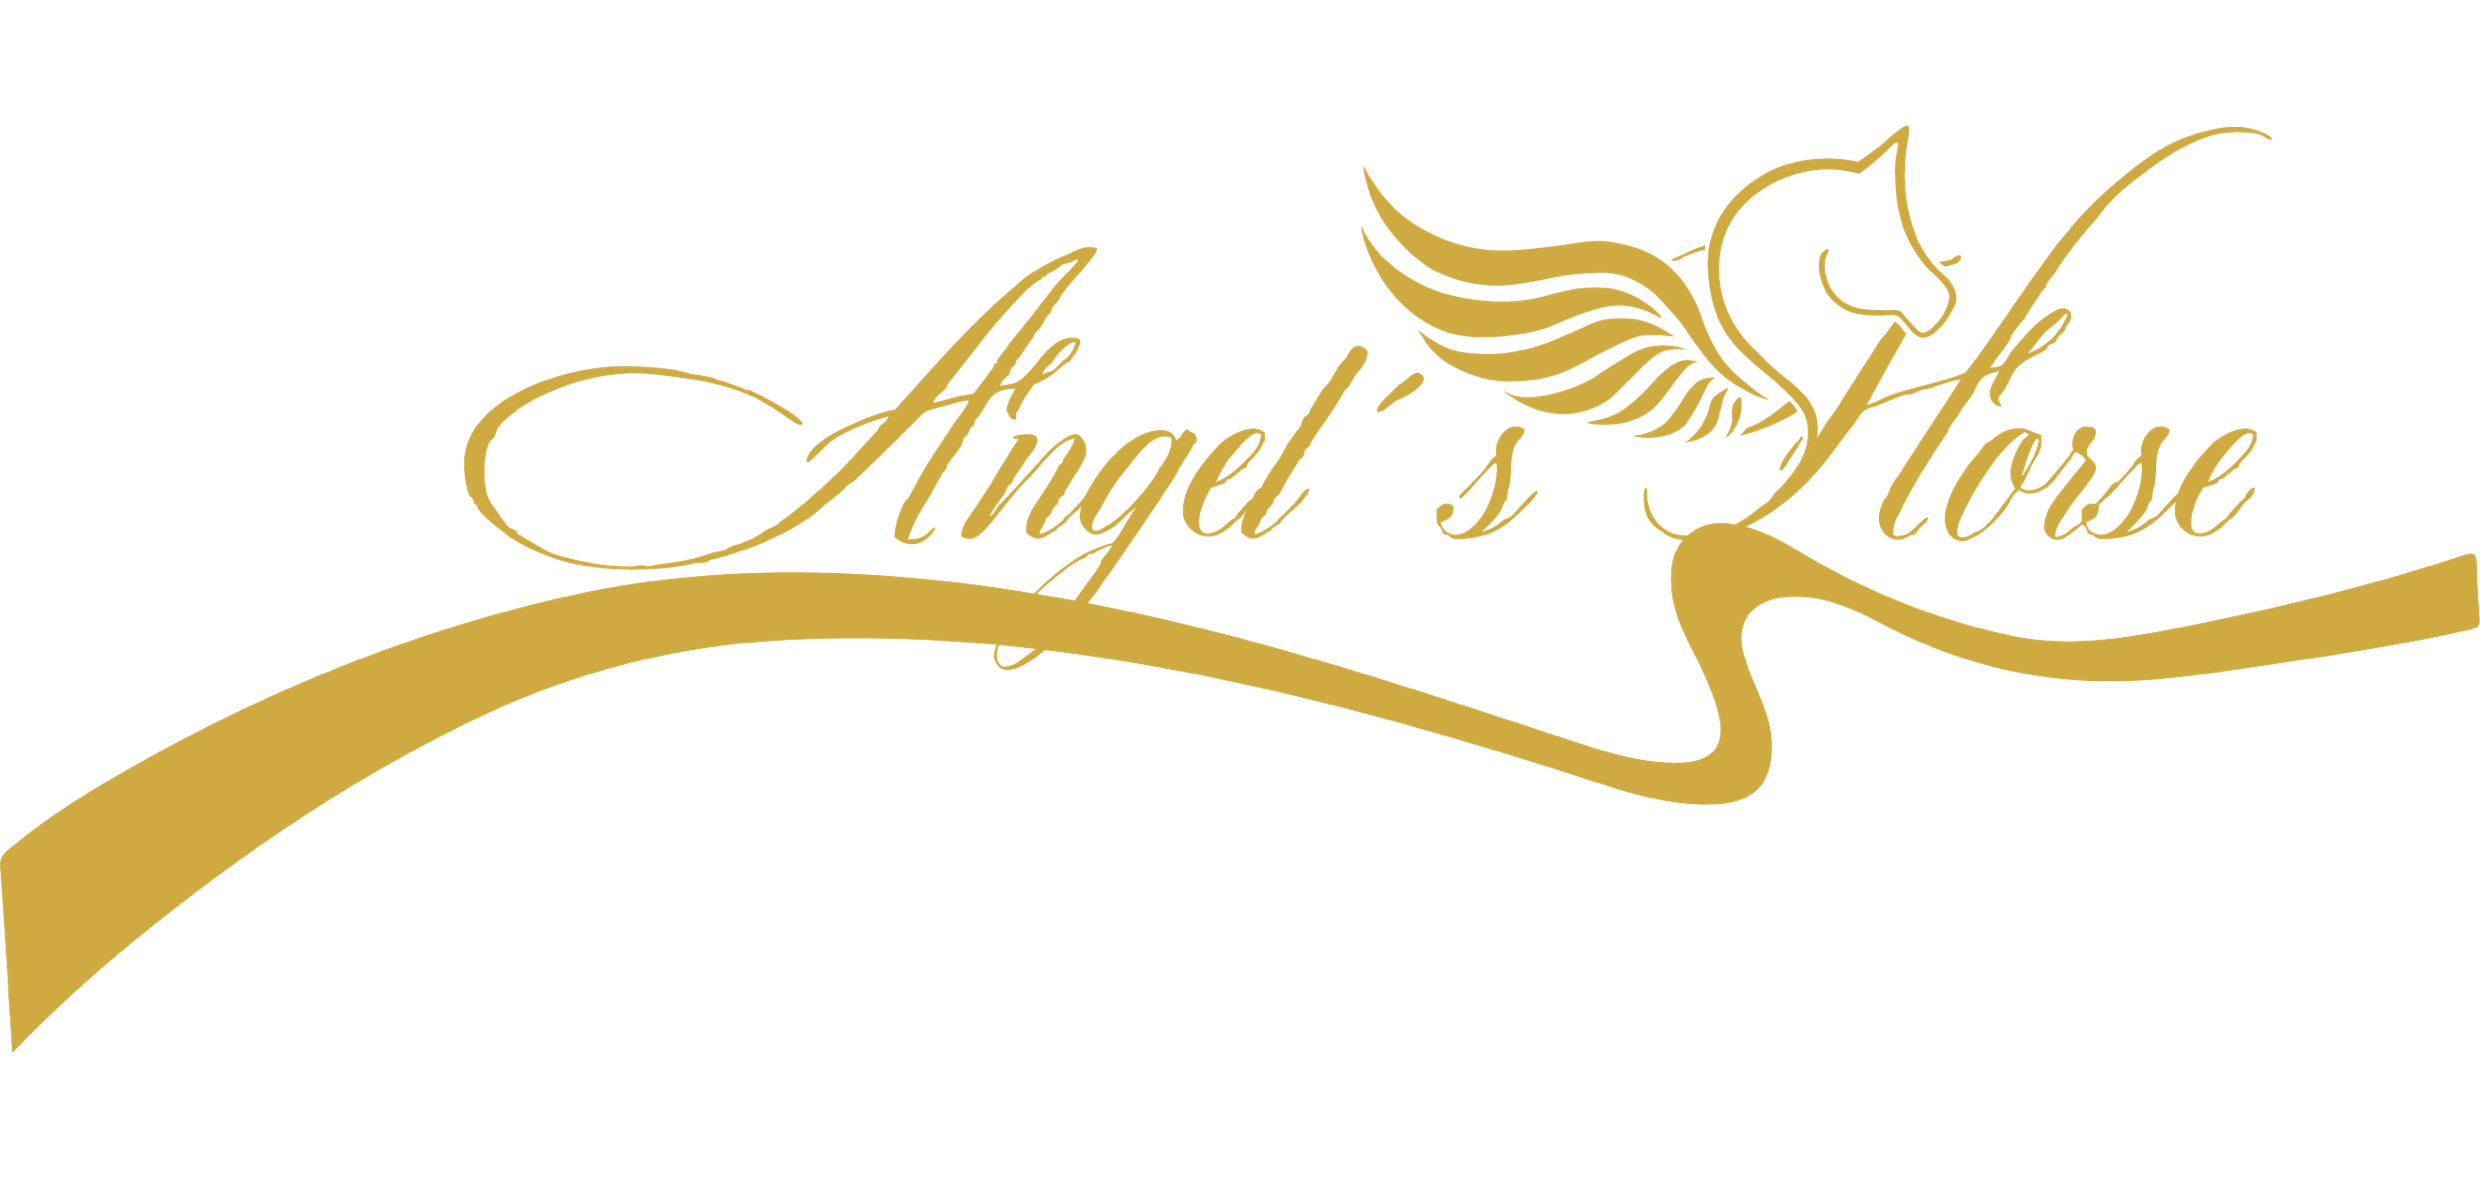 AngelsHorse